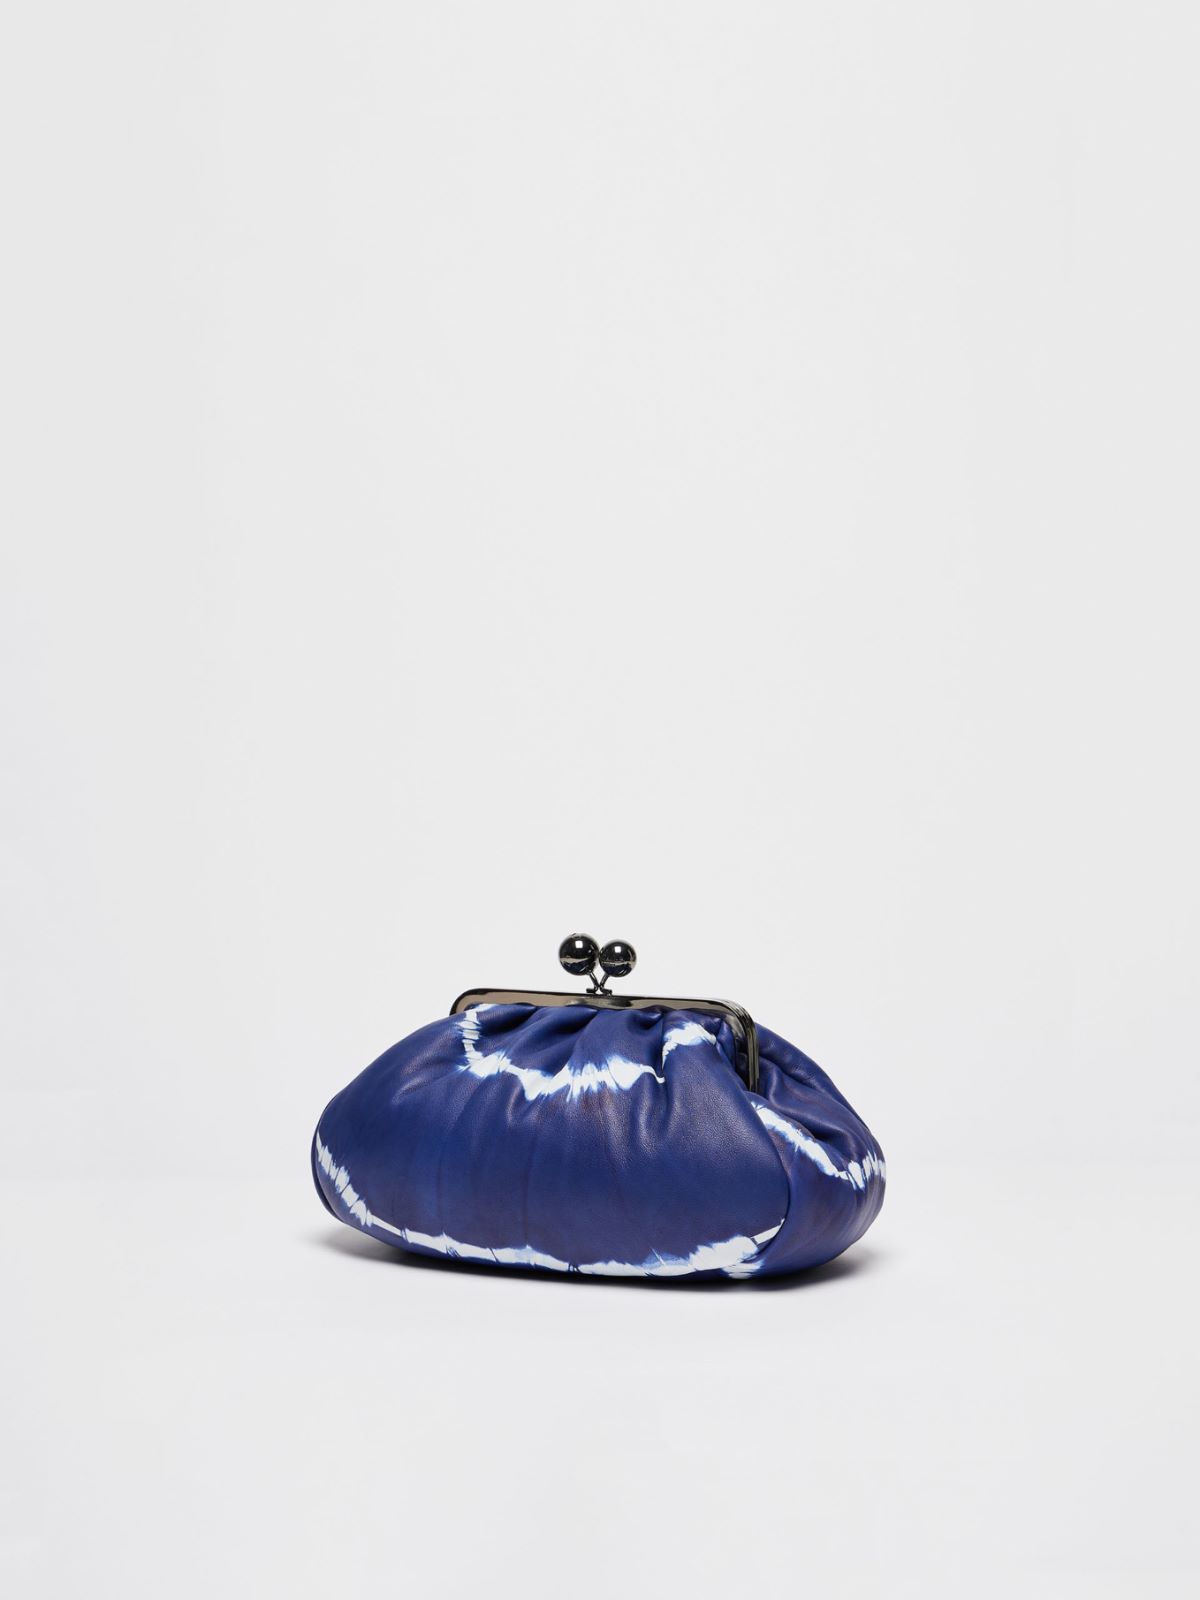 Medium Pasticcino Bag in nappa leather  - CORNFLOWER BLUE - Weekend Max Mara - 2